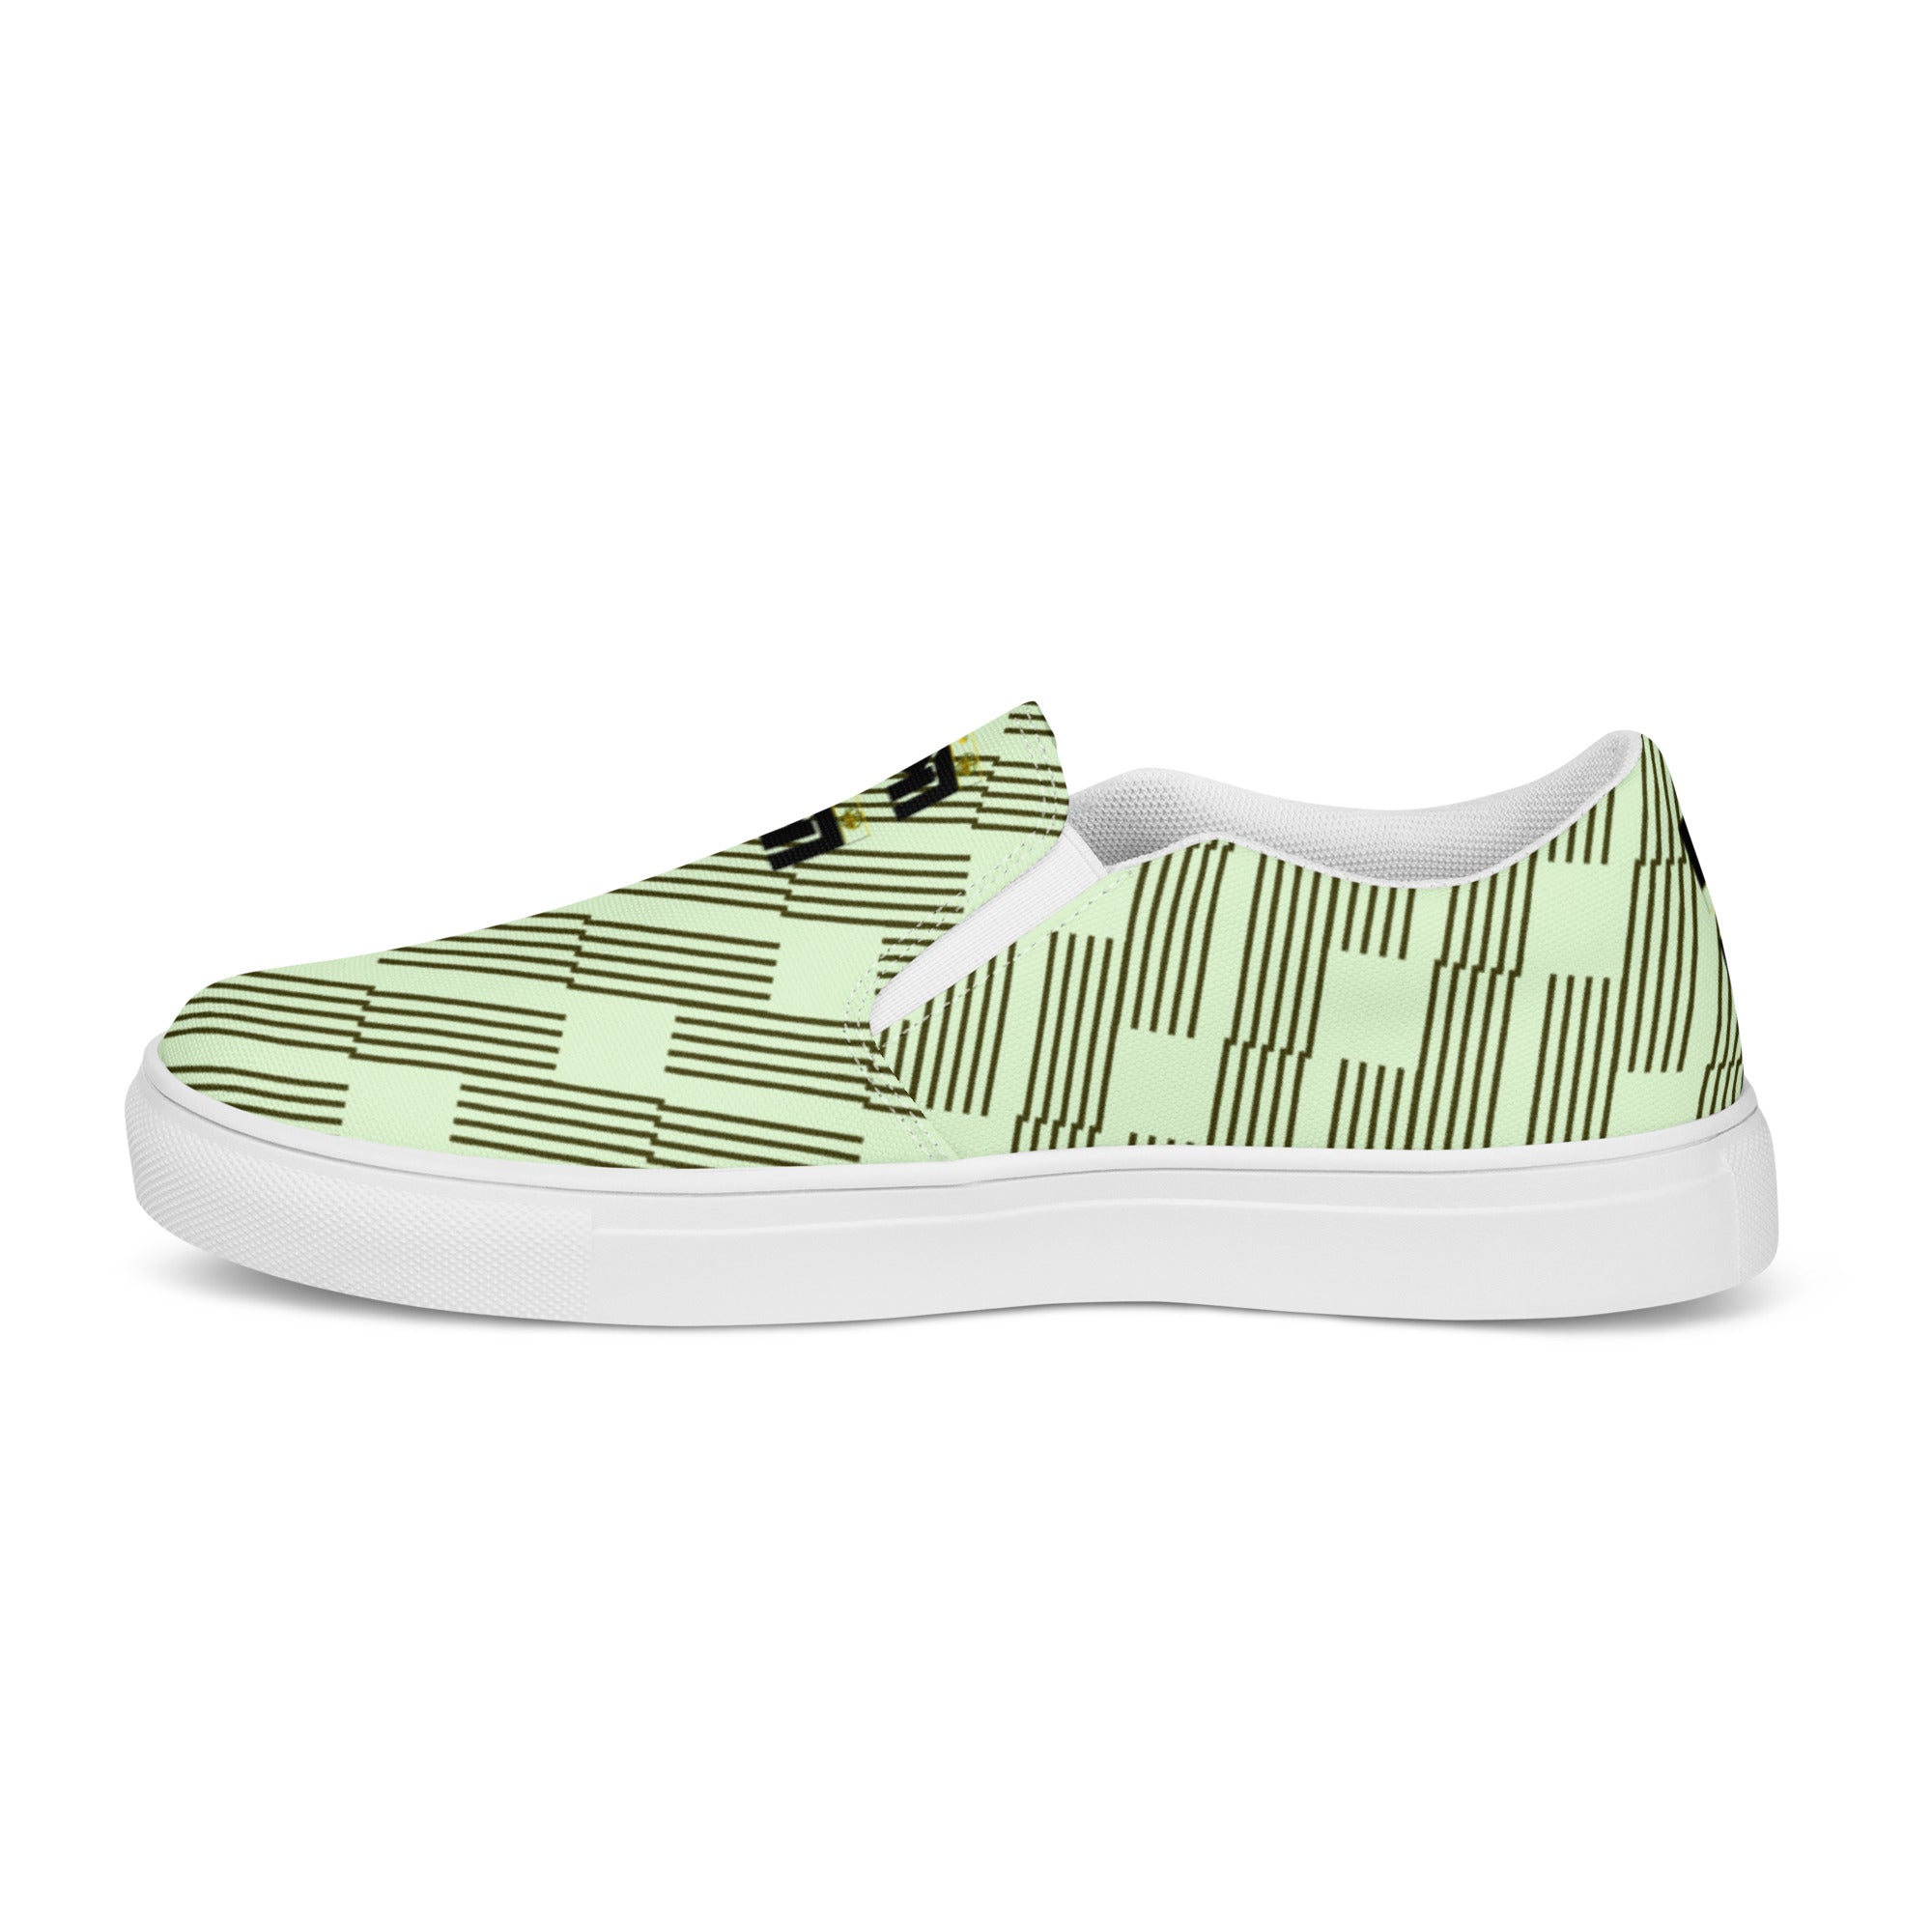 Men’s slip-on green lkf9 shoes